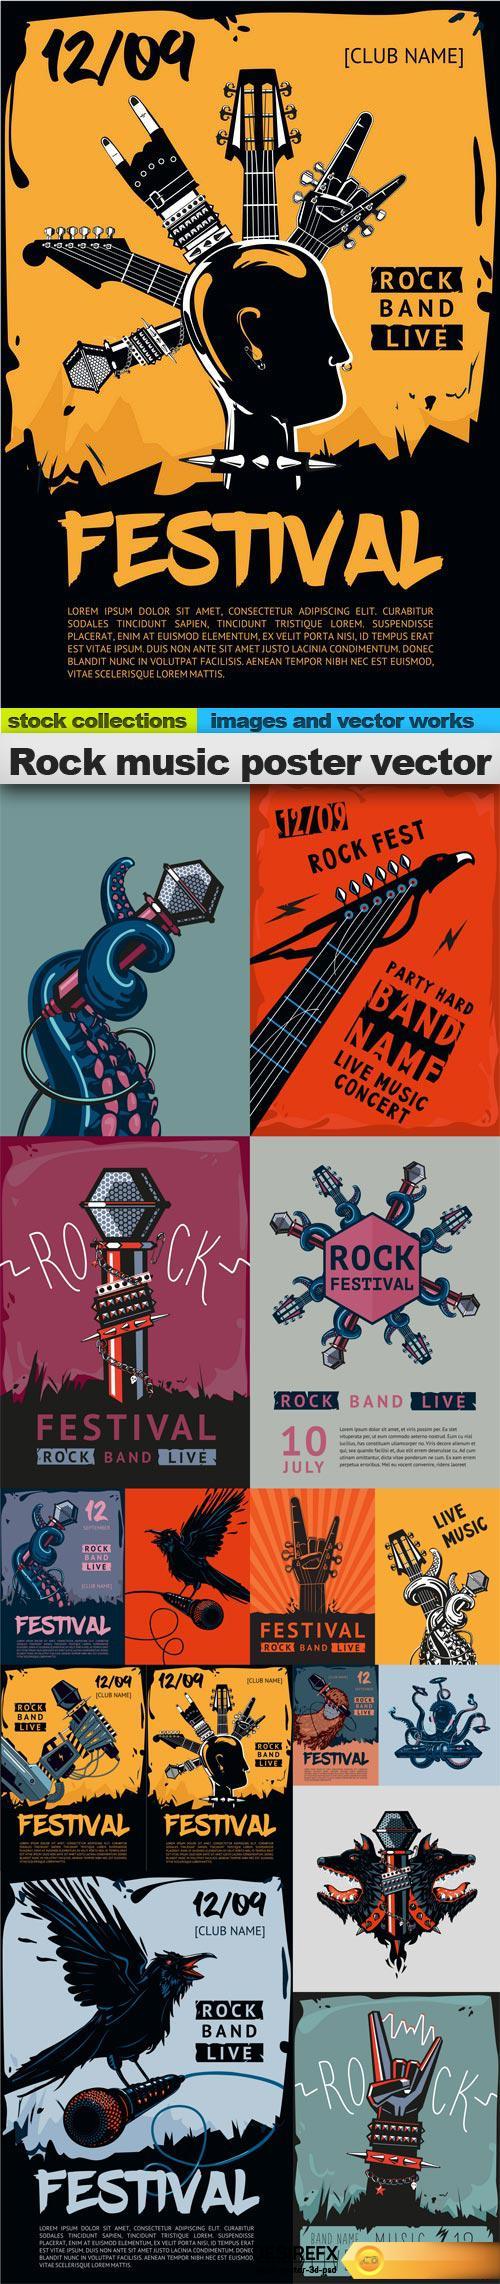 Rock music poster vector, 15 x EPS